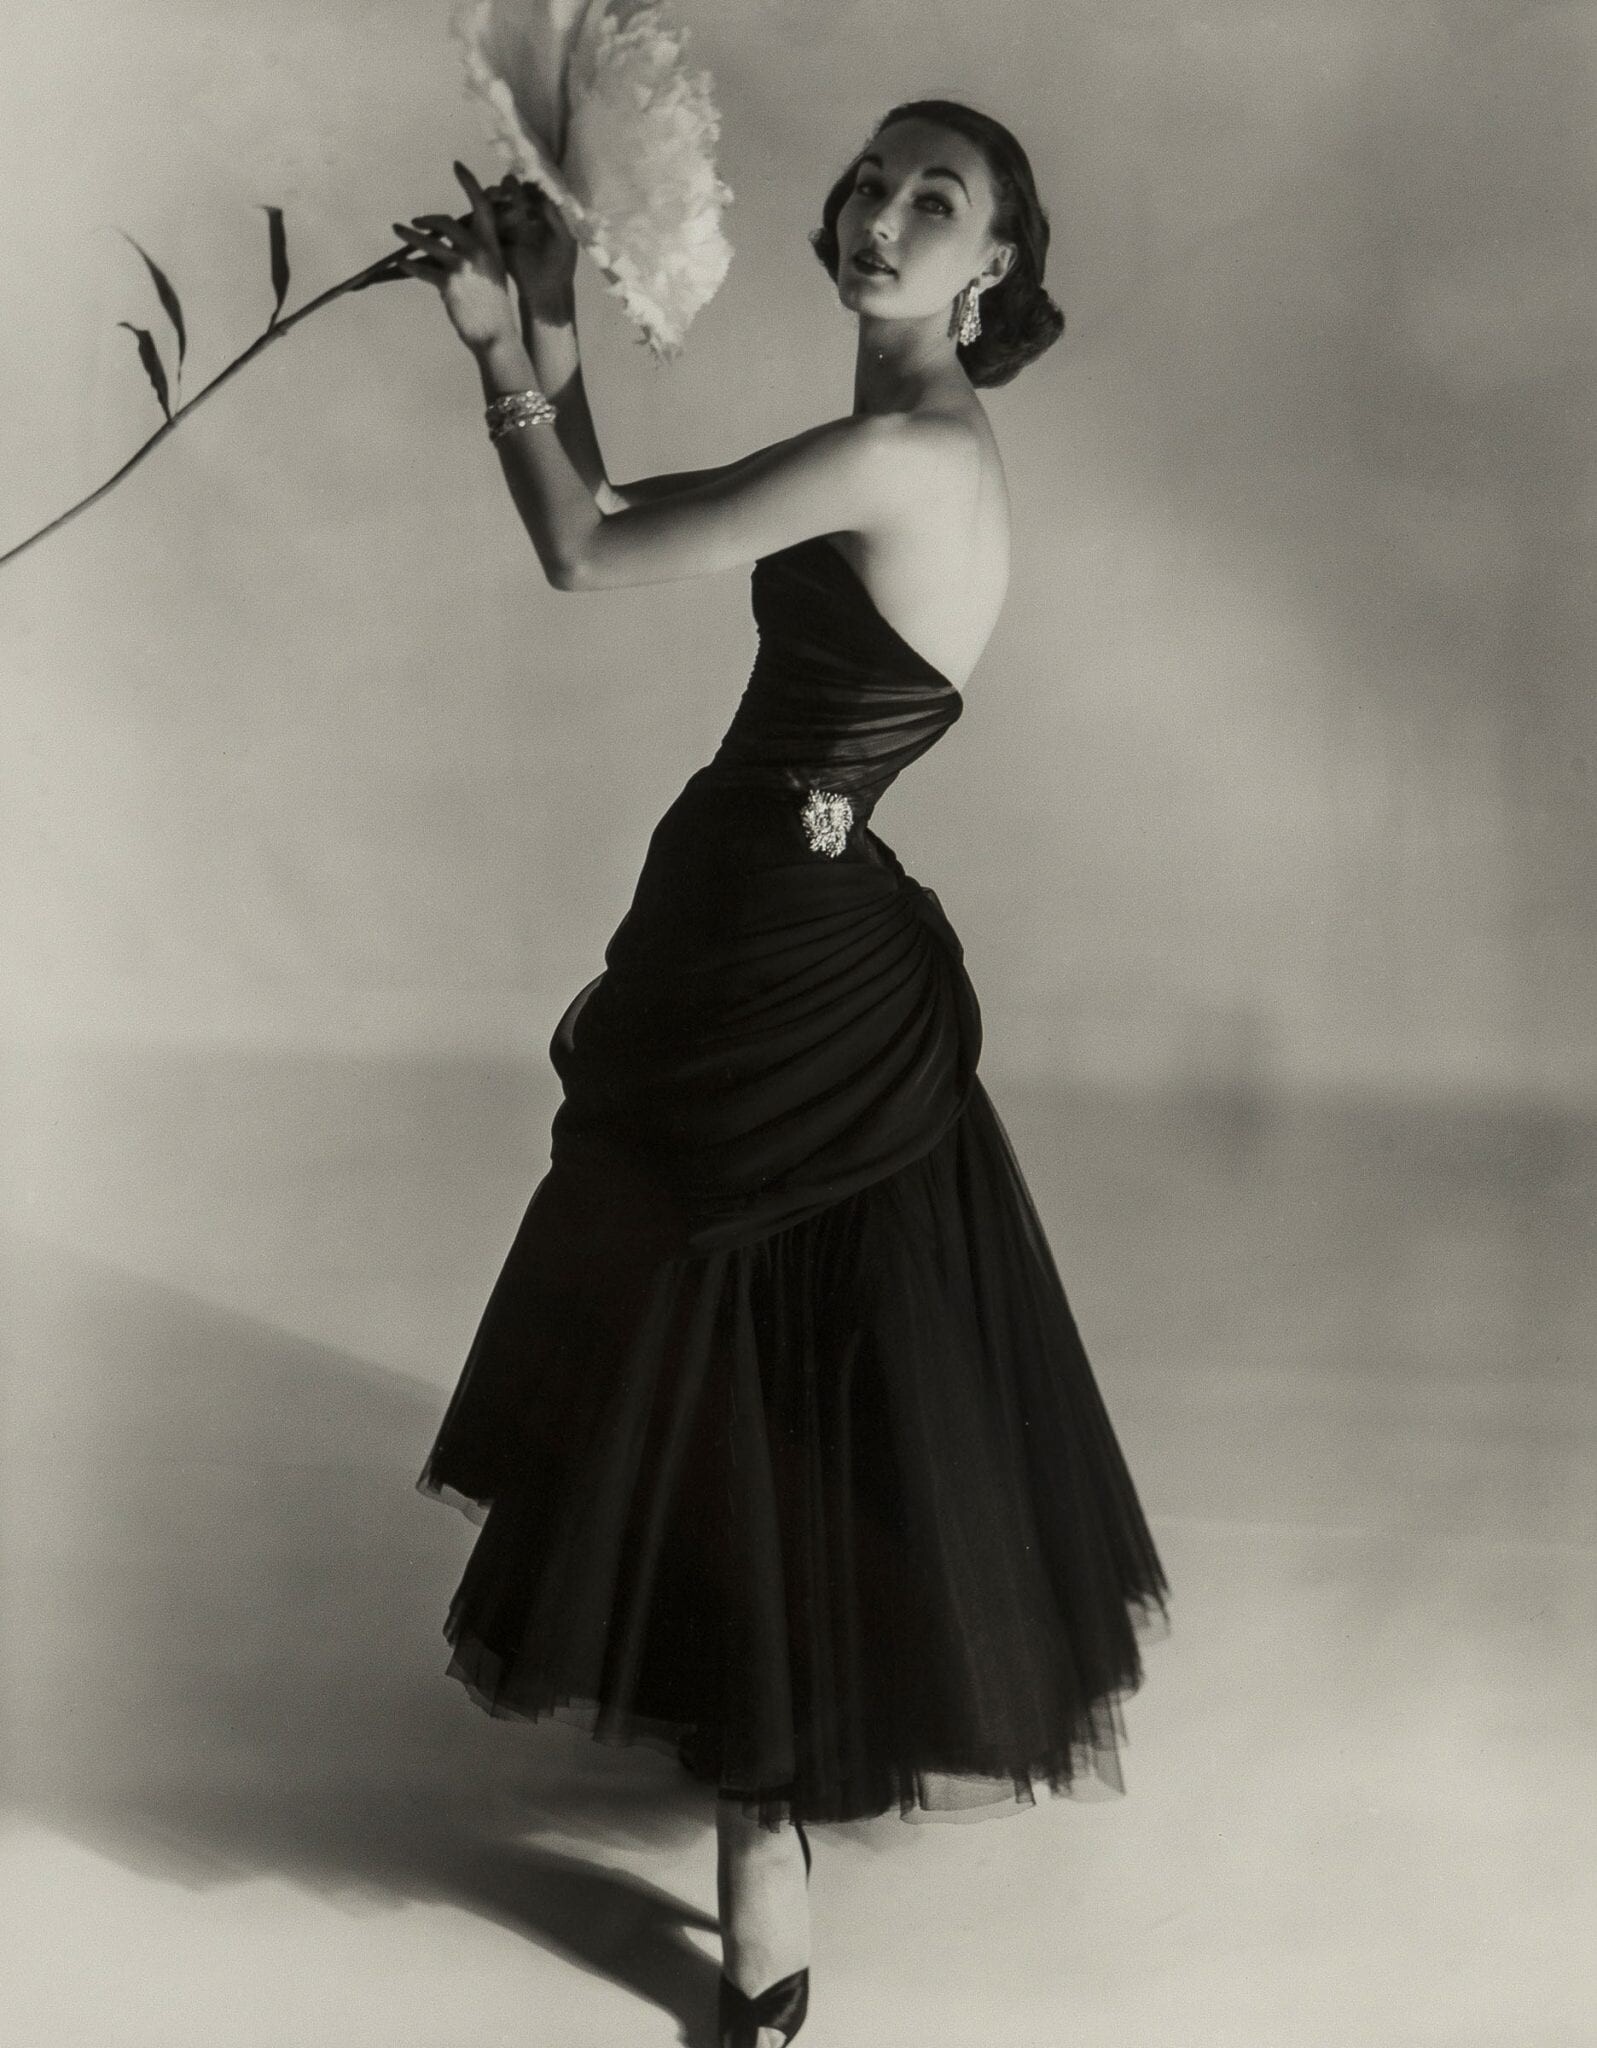 Эвелин Трипп с цветком, 1951. Фотограф Хорст П. Хорст